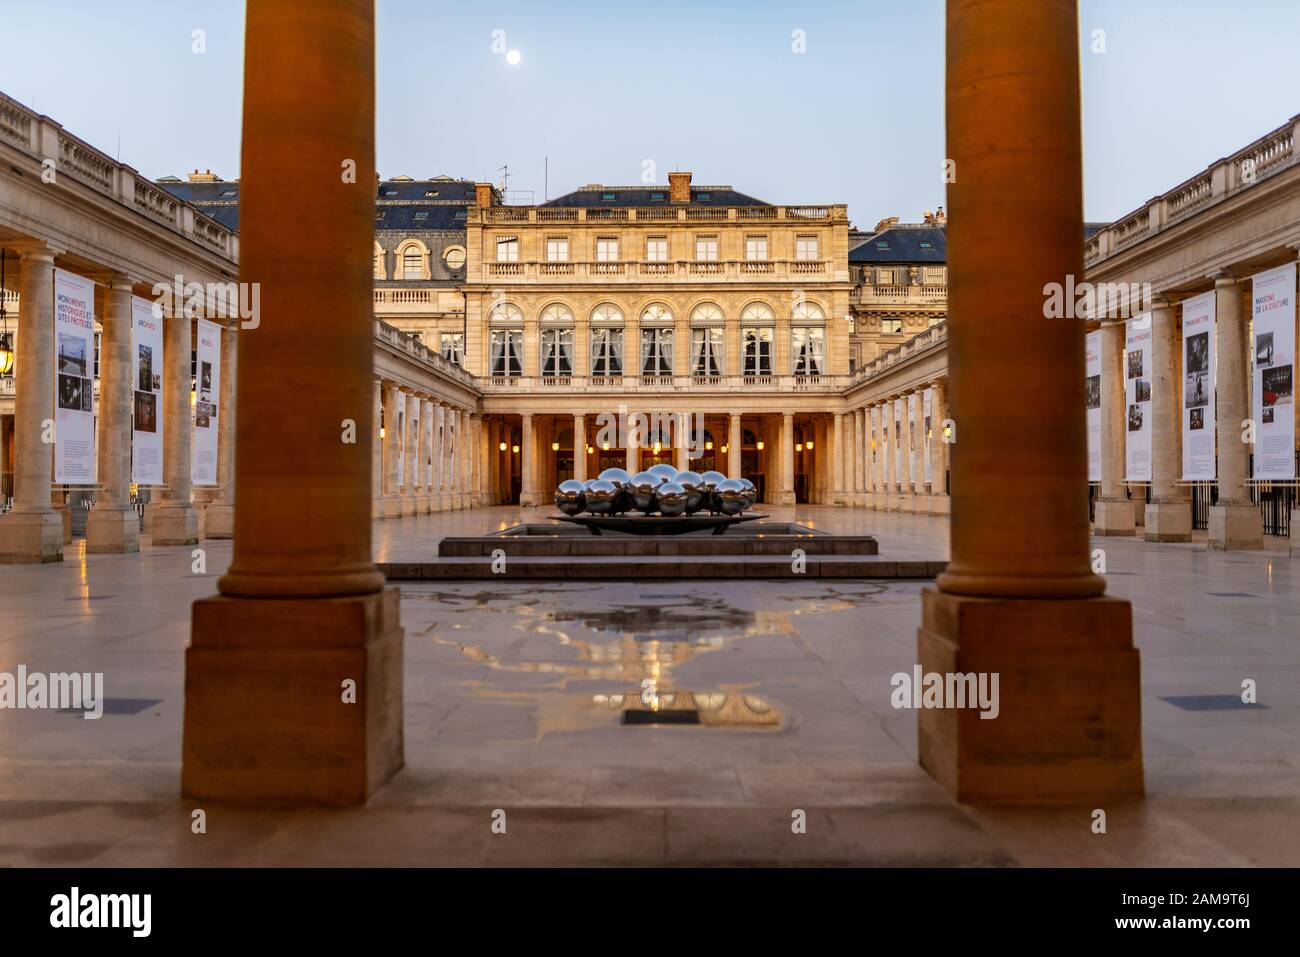 Long distance view of a modern public sculpture, taken during a winter morning at the Palais Royal public garden, Paris, France Stock Photo